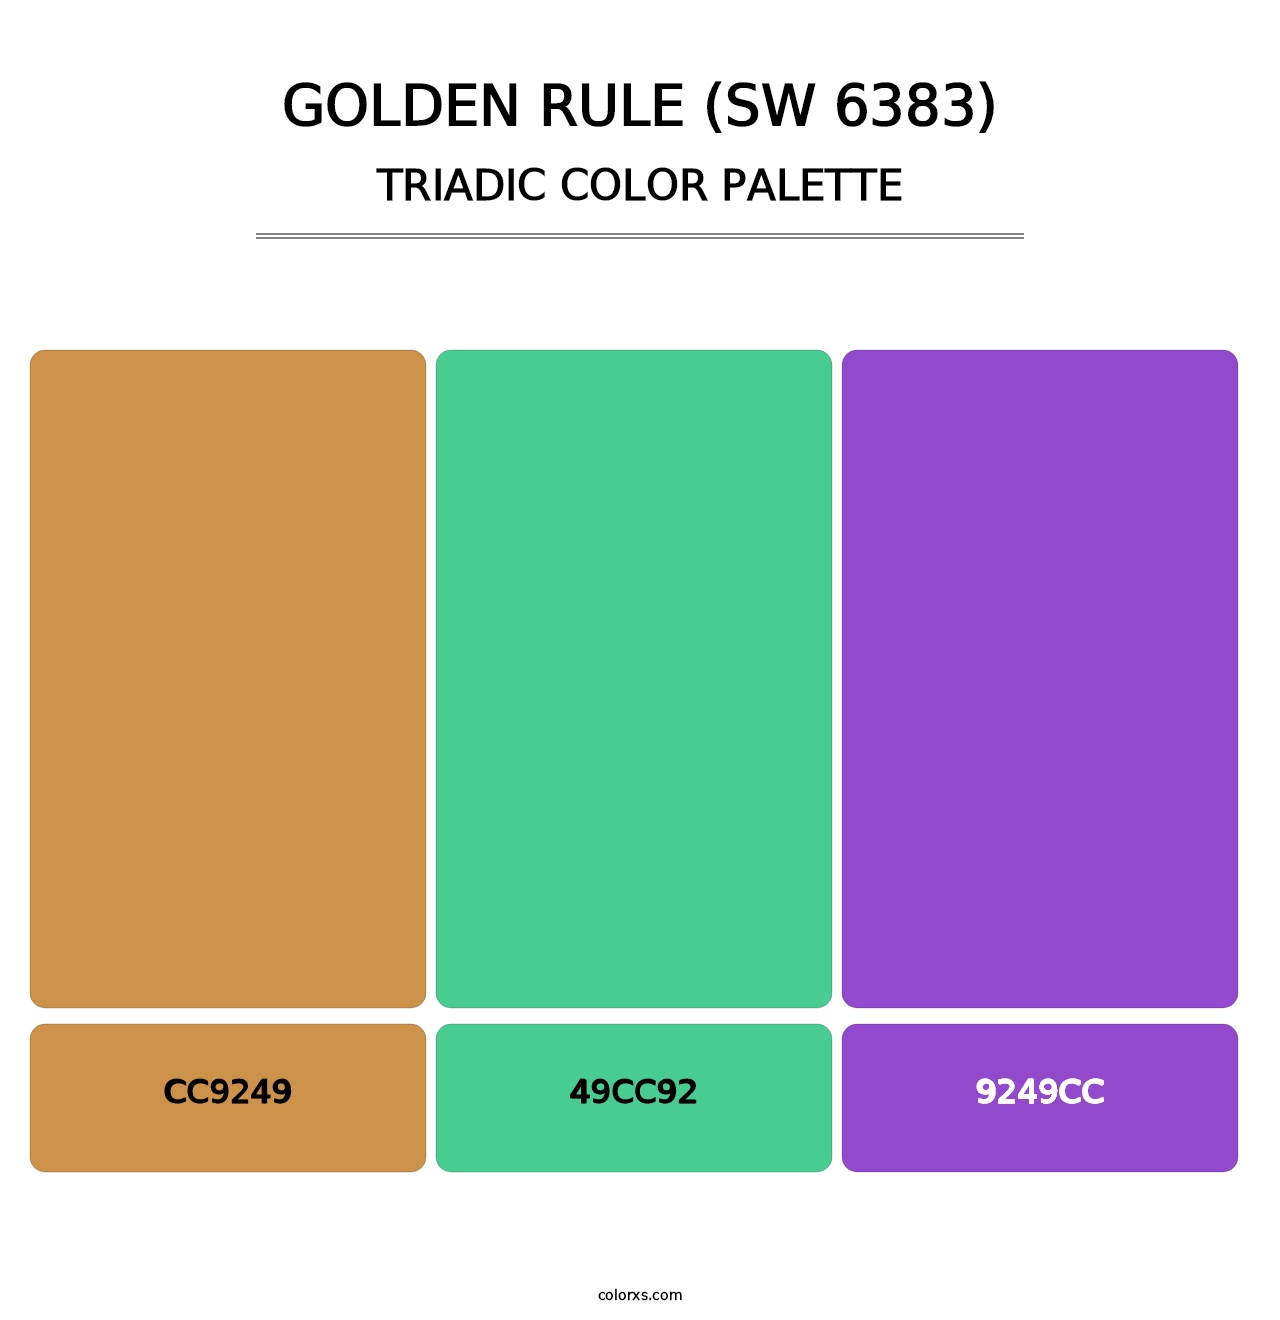 Golden Rule (SW 6383) - Triadic Color Palette